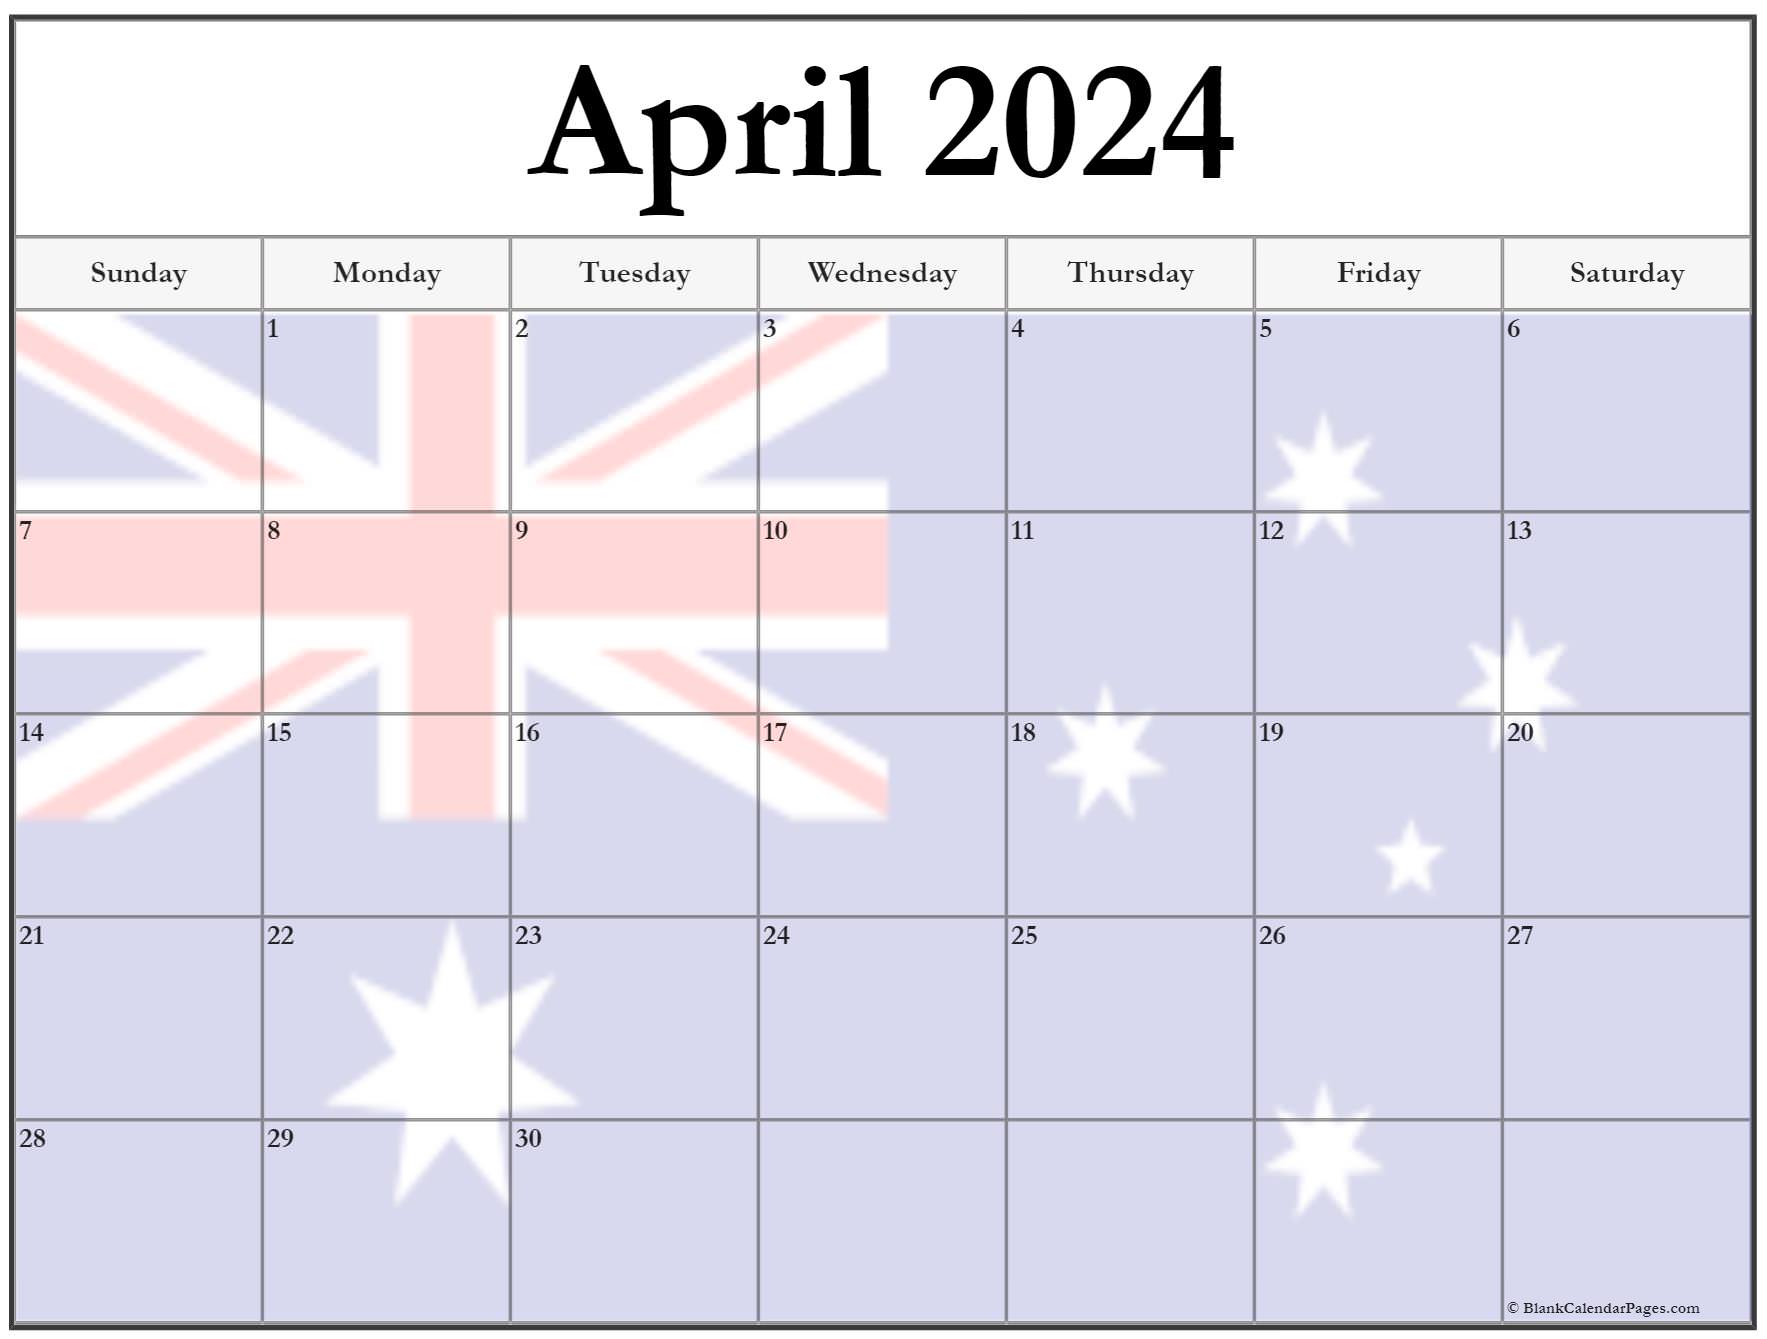 aggregate-95-about-2023-calendar-australia-best-daotaonec-free